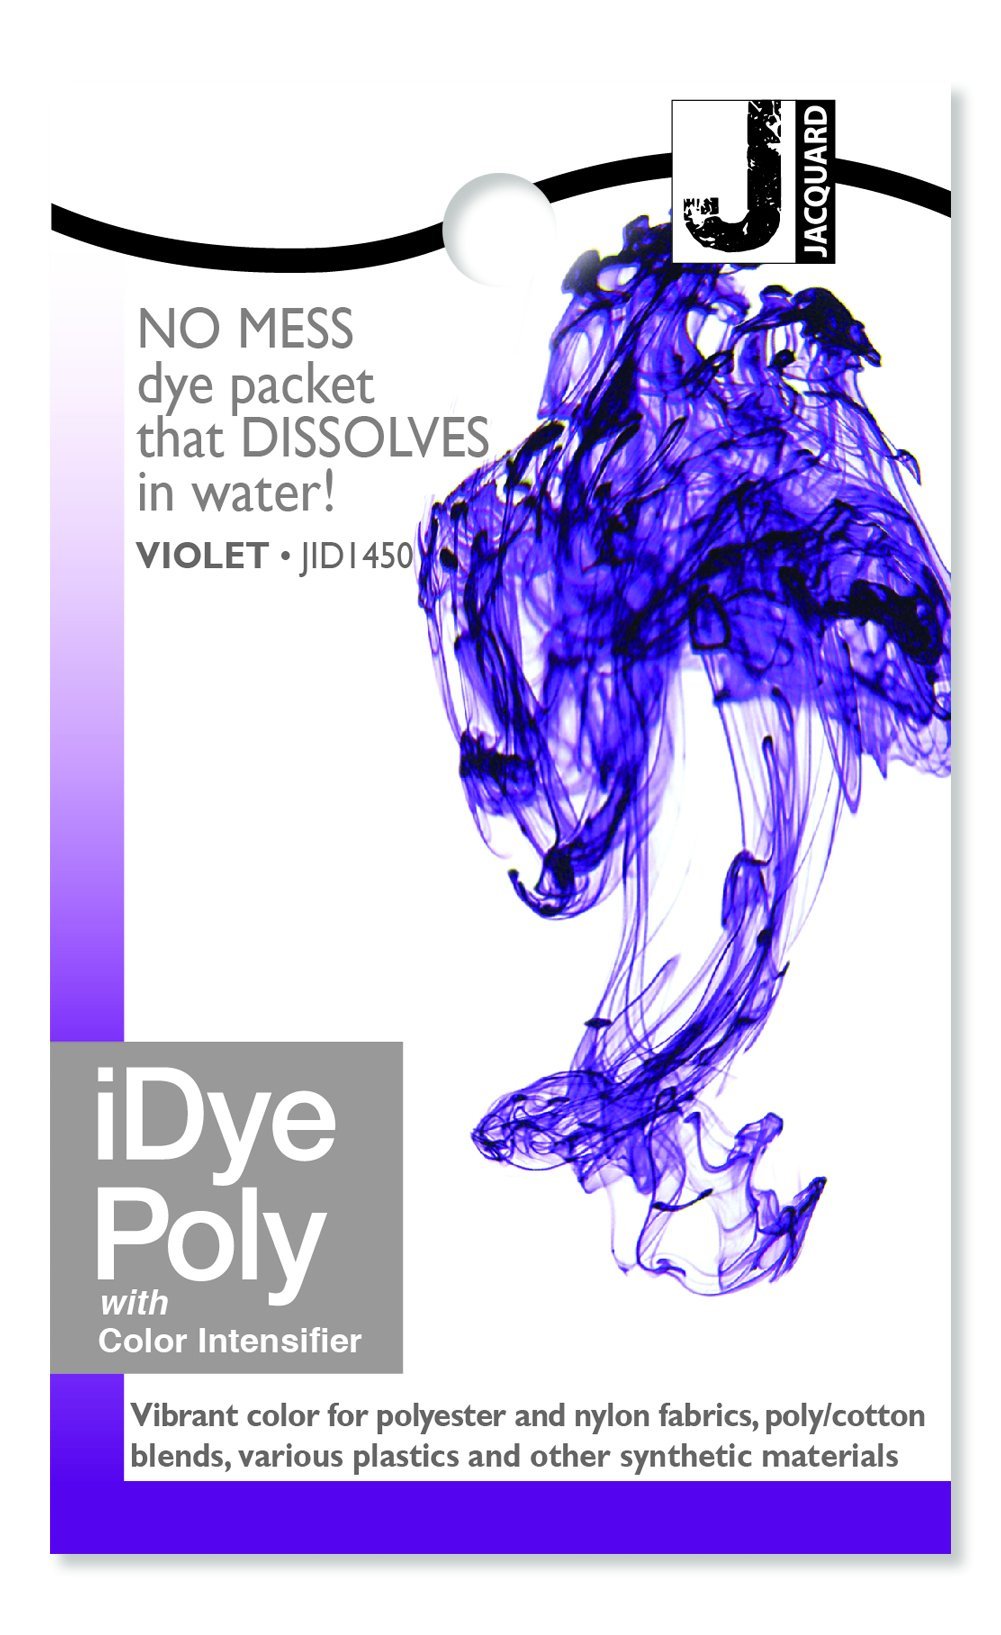 Comprar iDye poliéster online | Modulor